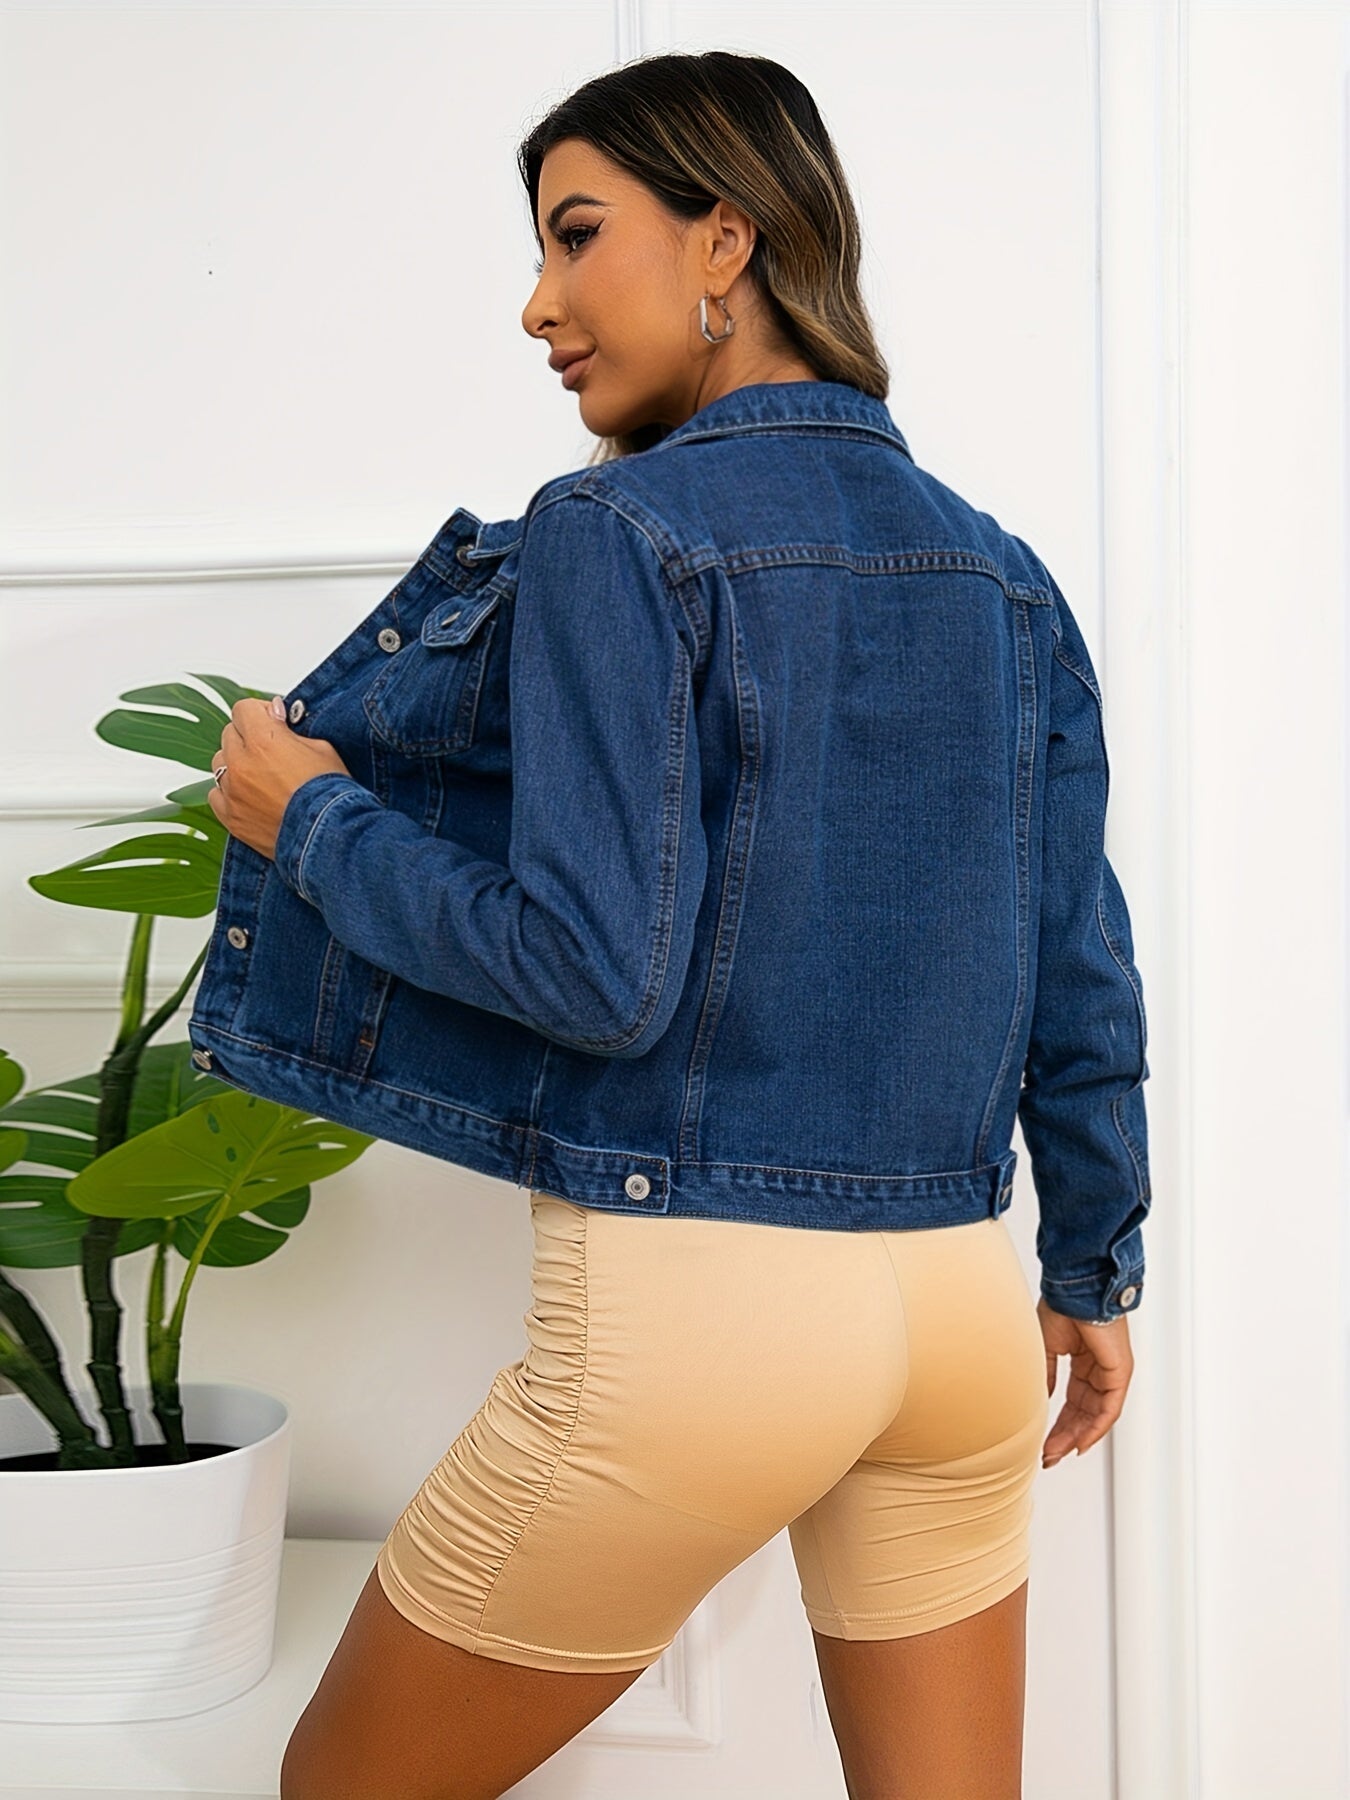 「binfenxie」Flap Pocket Single-breasted Trucker Jacket, Long Sleeves Causal Style Blue Denim Coat, Women's Denim Jeans & Clothing